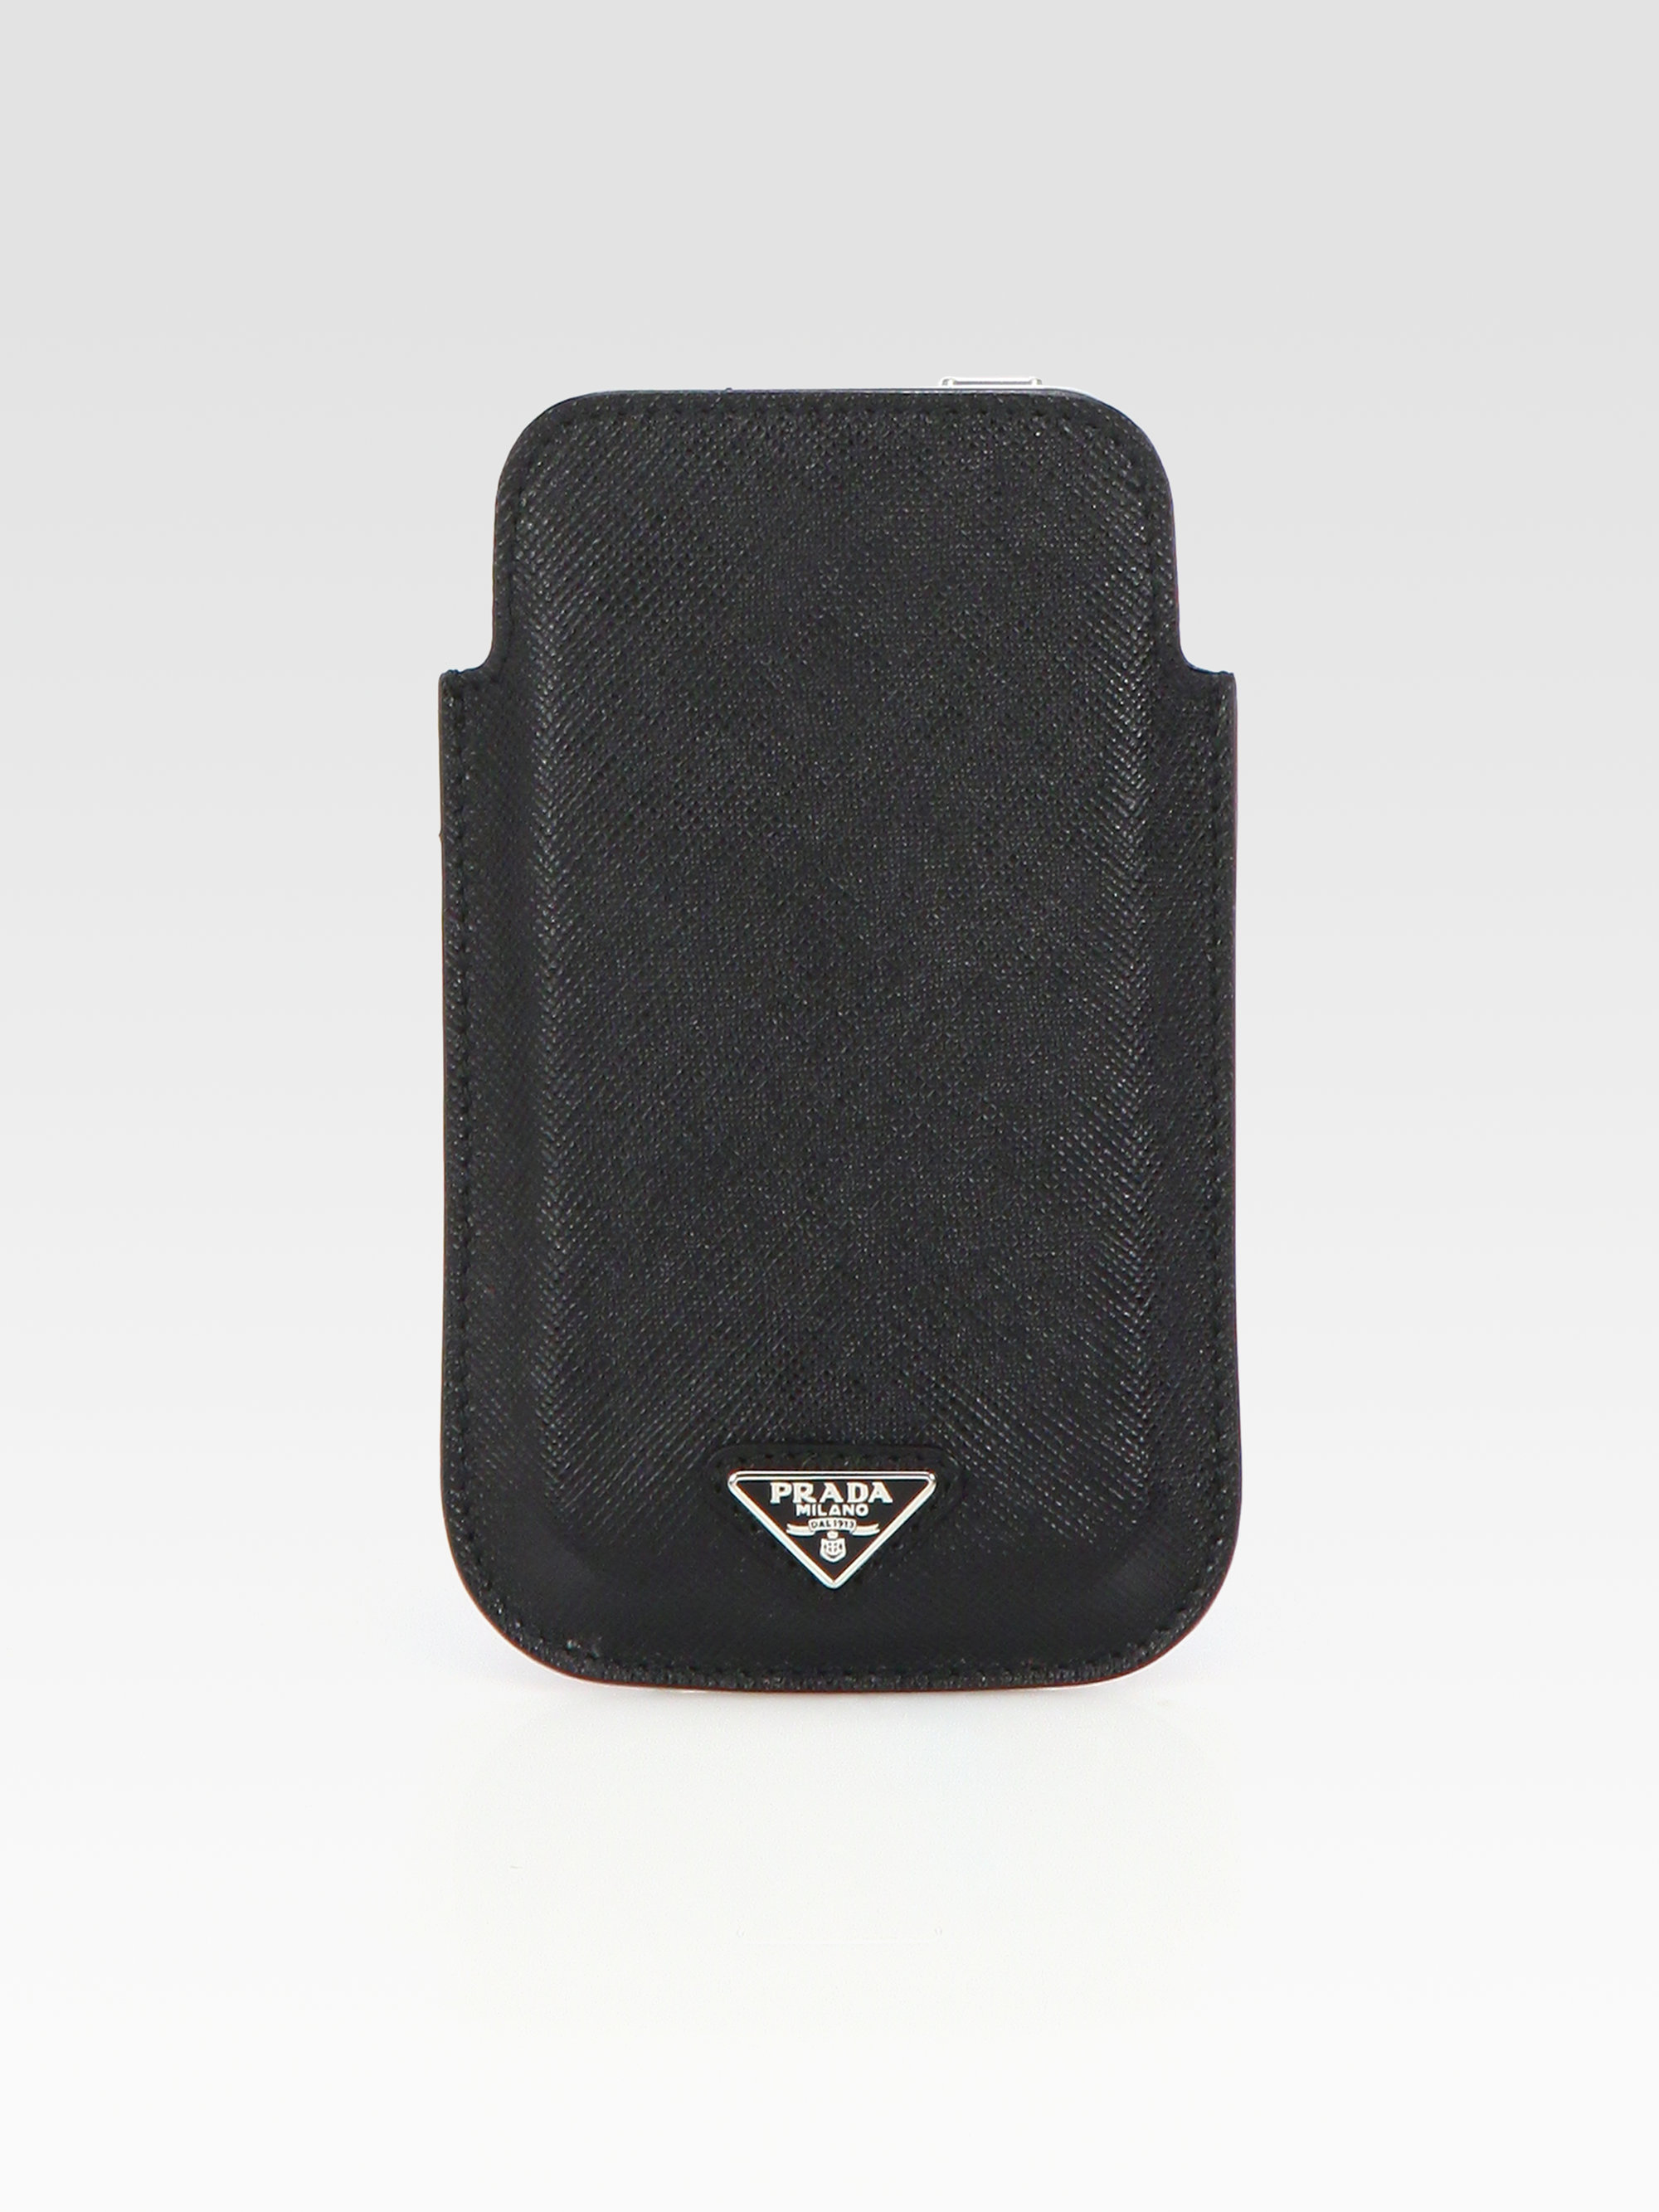 Prada Saffiano Leather Iphone Case in Black | Lyst  